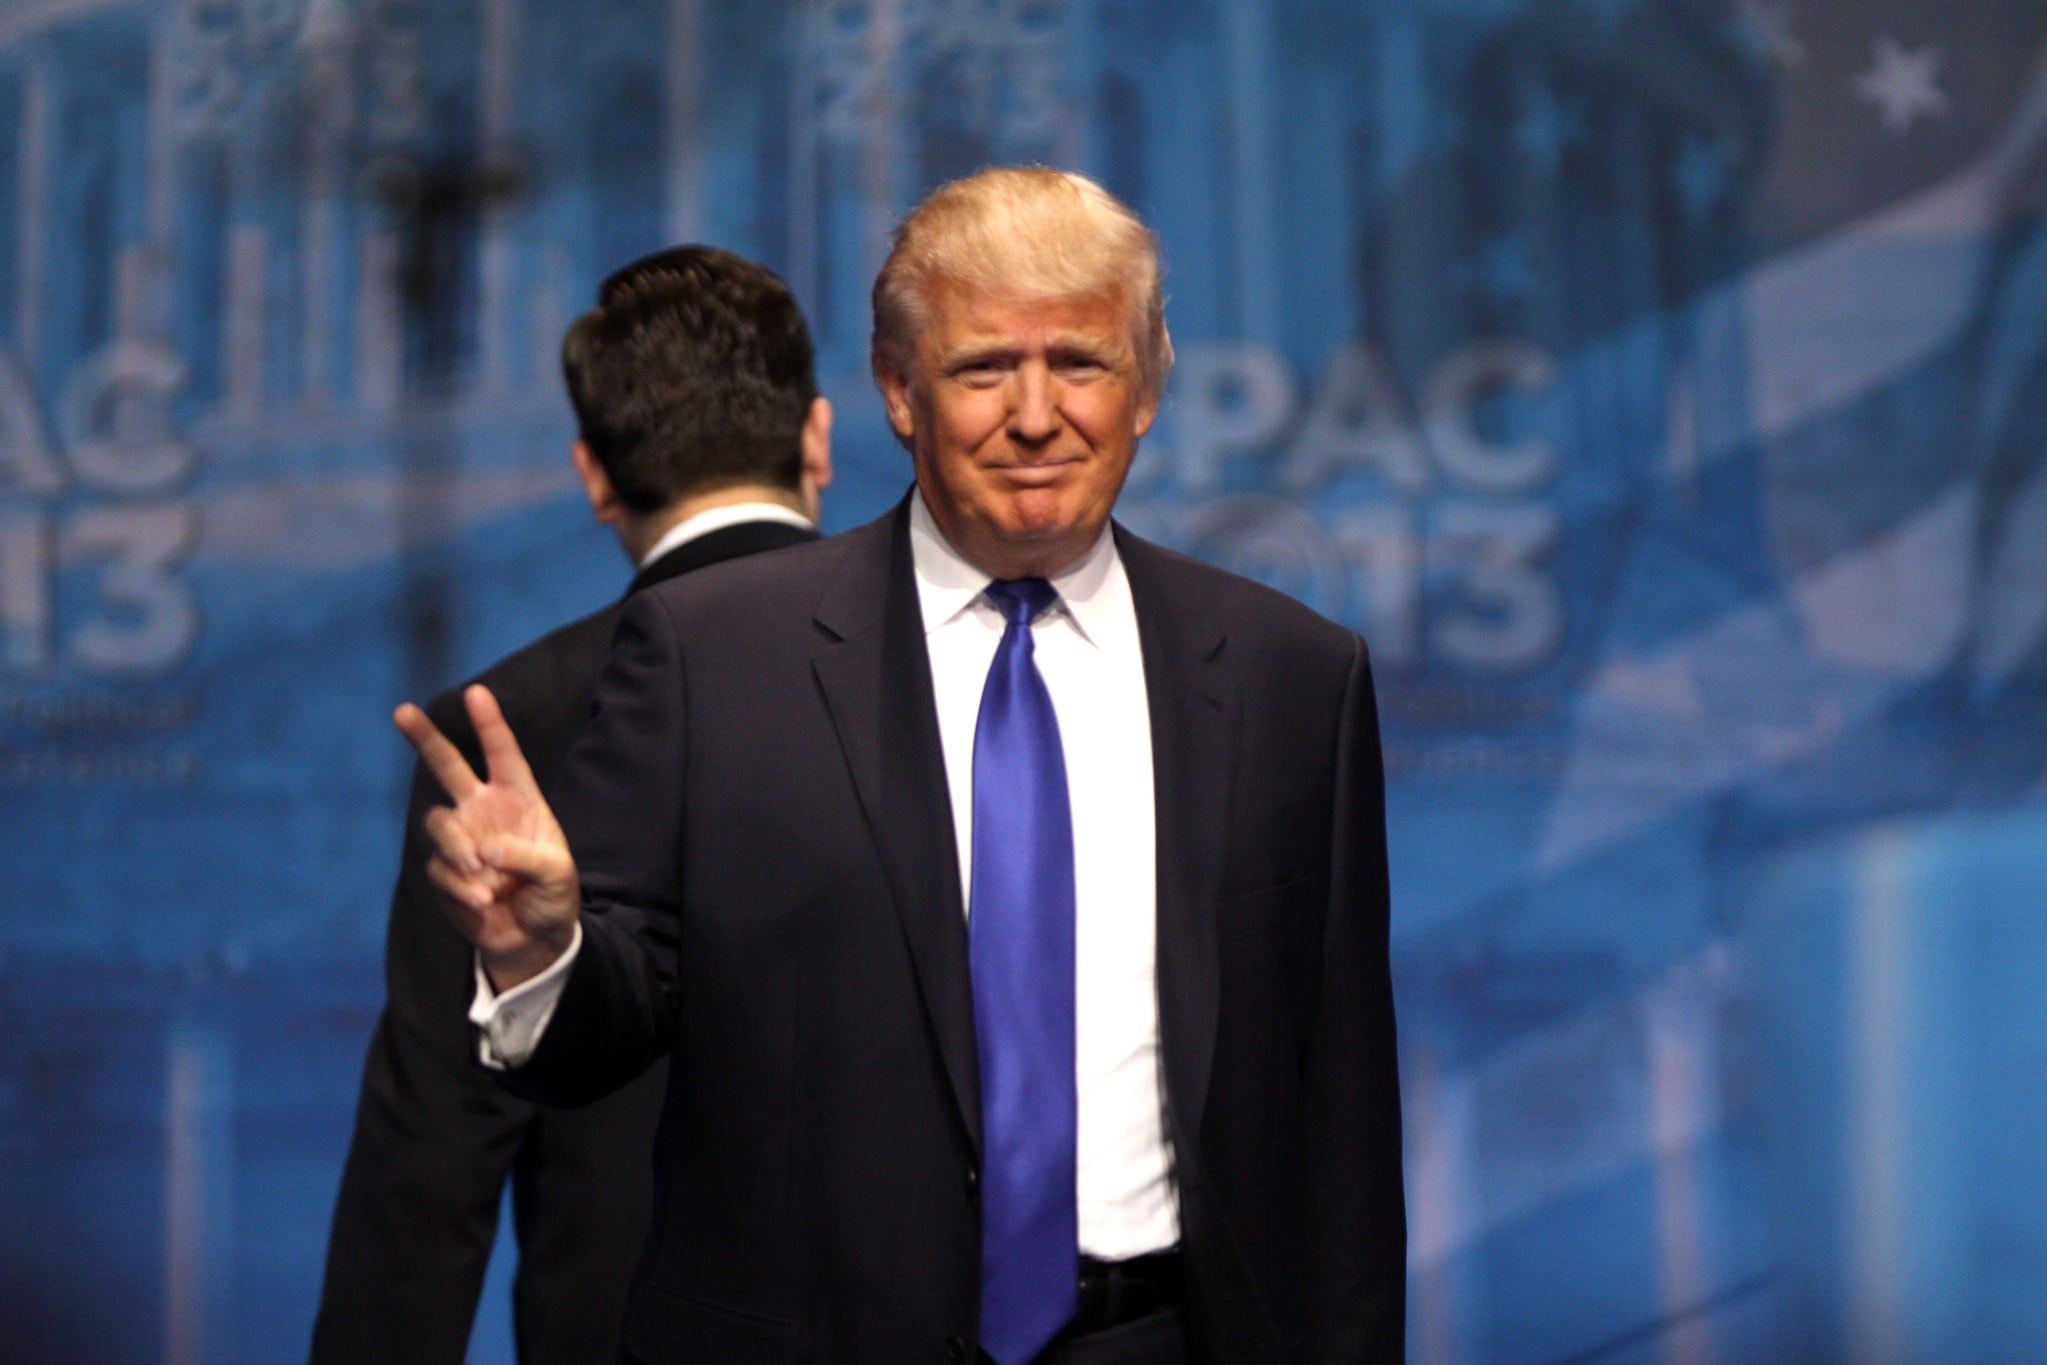 Donald-Trump making the vistory sign